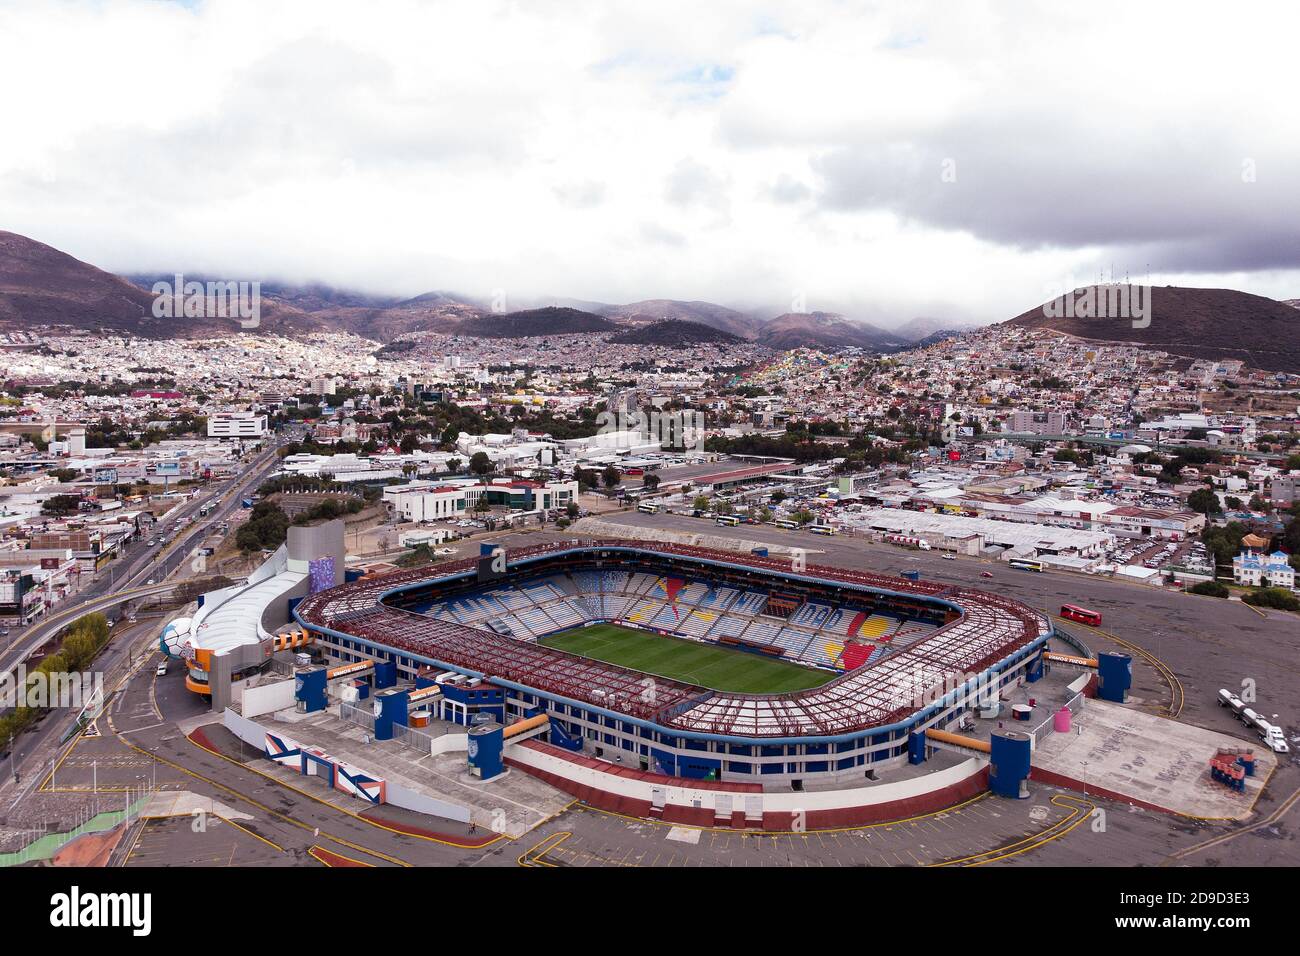 Aerial view of the Estadio Hidalgo, home of the Pachuca soccer team at Pachuca, Hidalgo, Mexico. Stock Photo